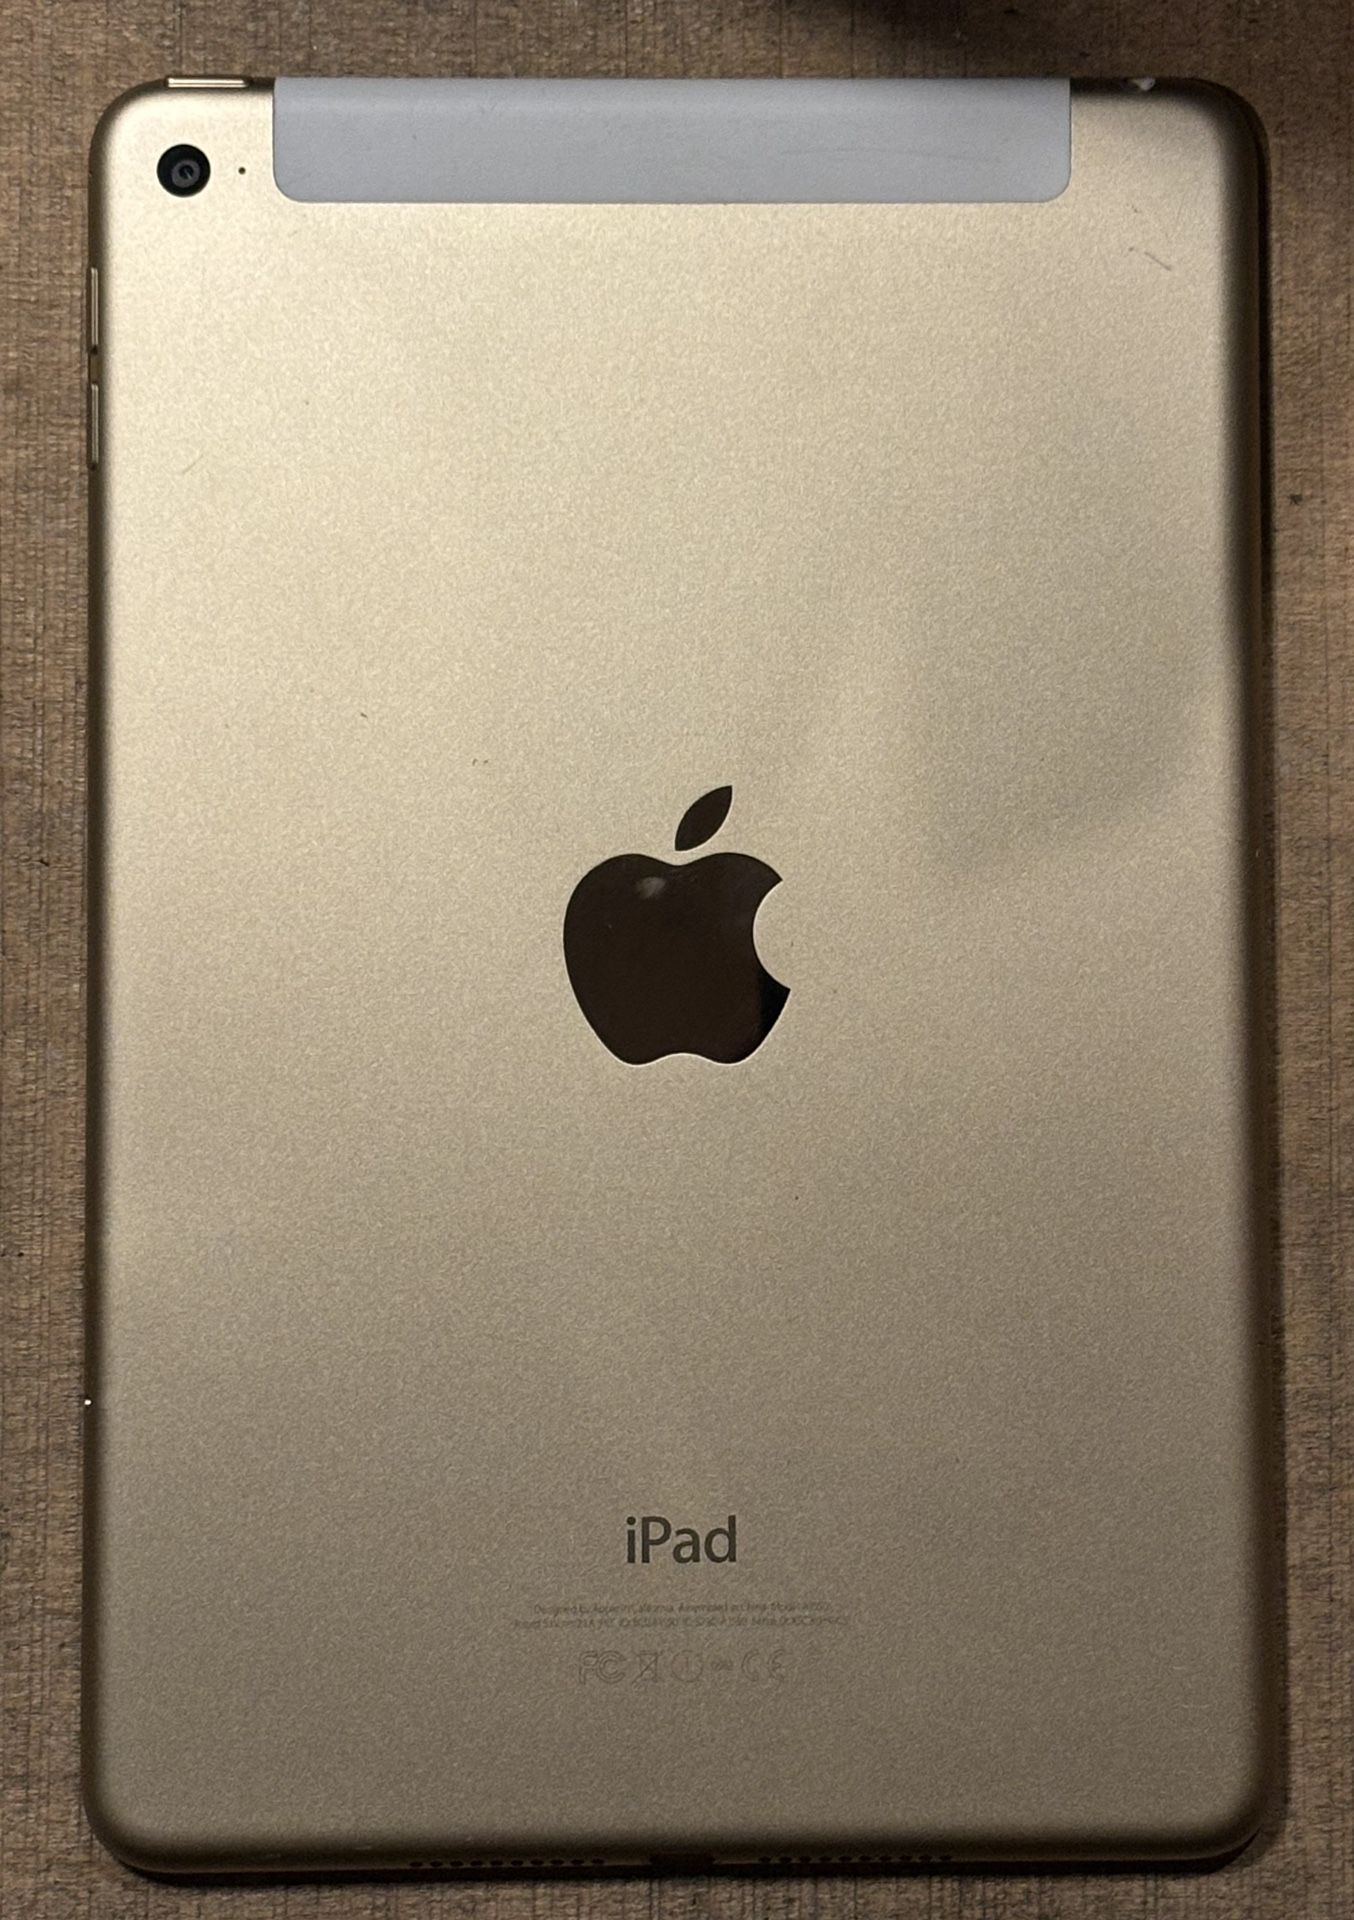 iPad mini 4 Wi-Fi + Cellular. Factory Reset & Ready 